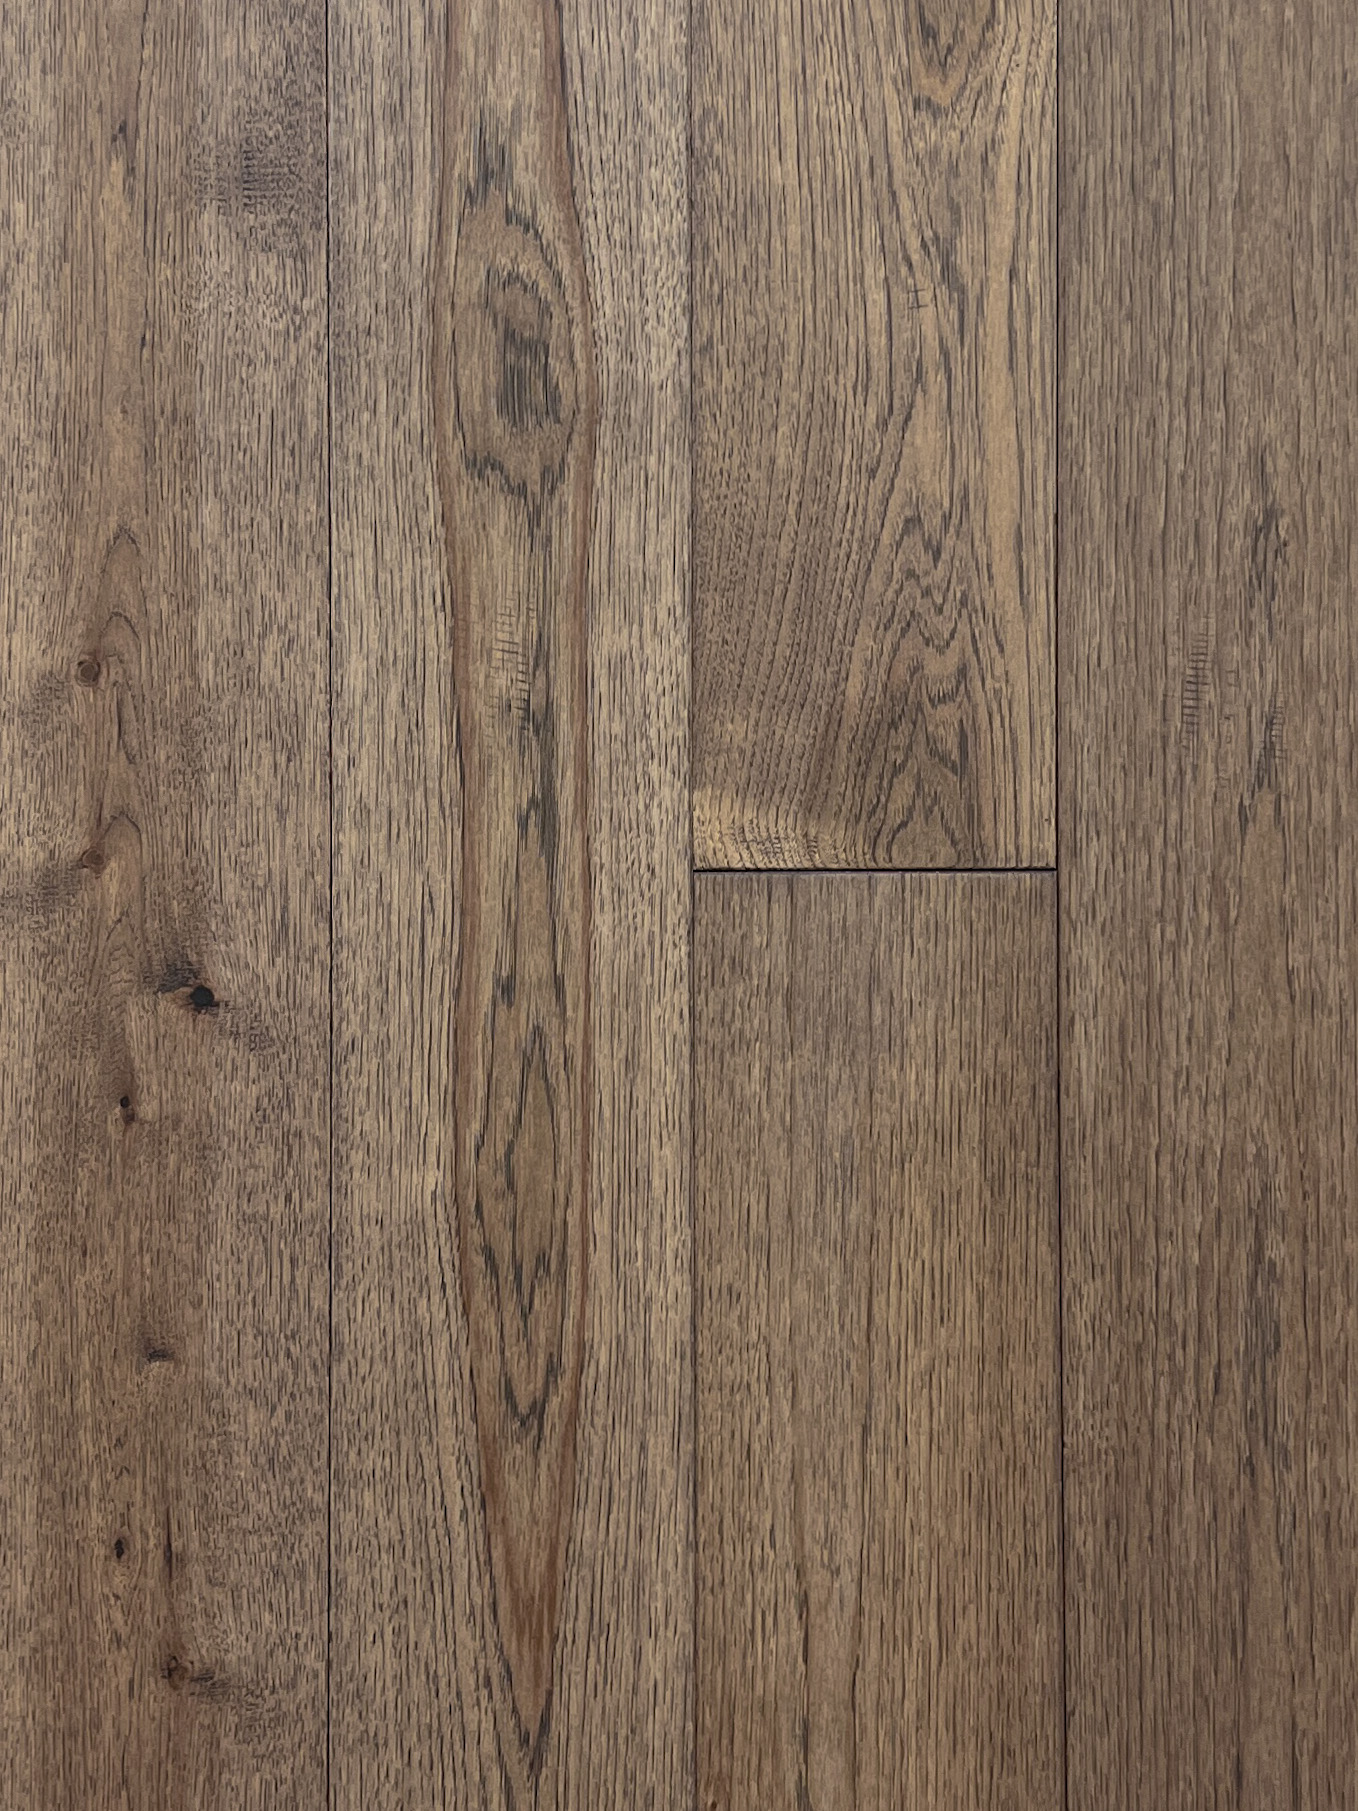 Floorest - 7 1/2 x 3/4 - Hickory Rocky Mountain - Engineered Hardwood - 19.43 SF/Box